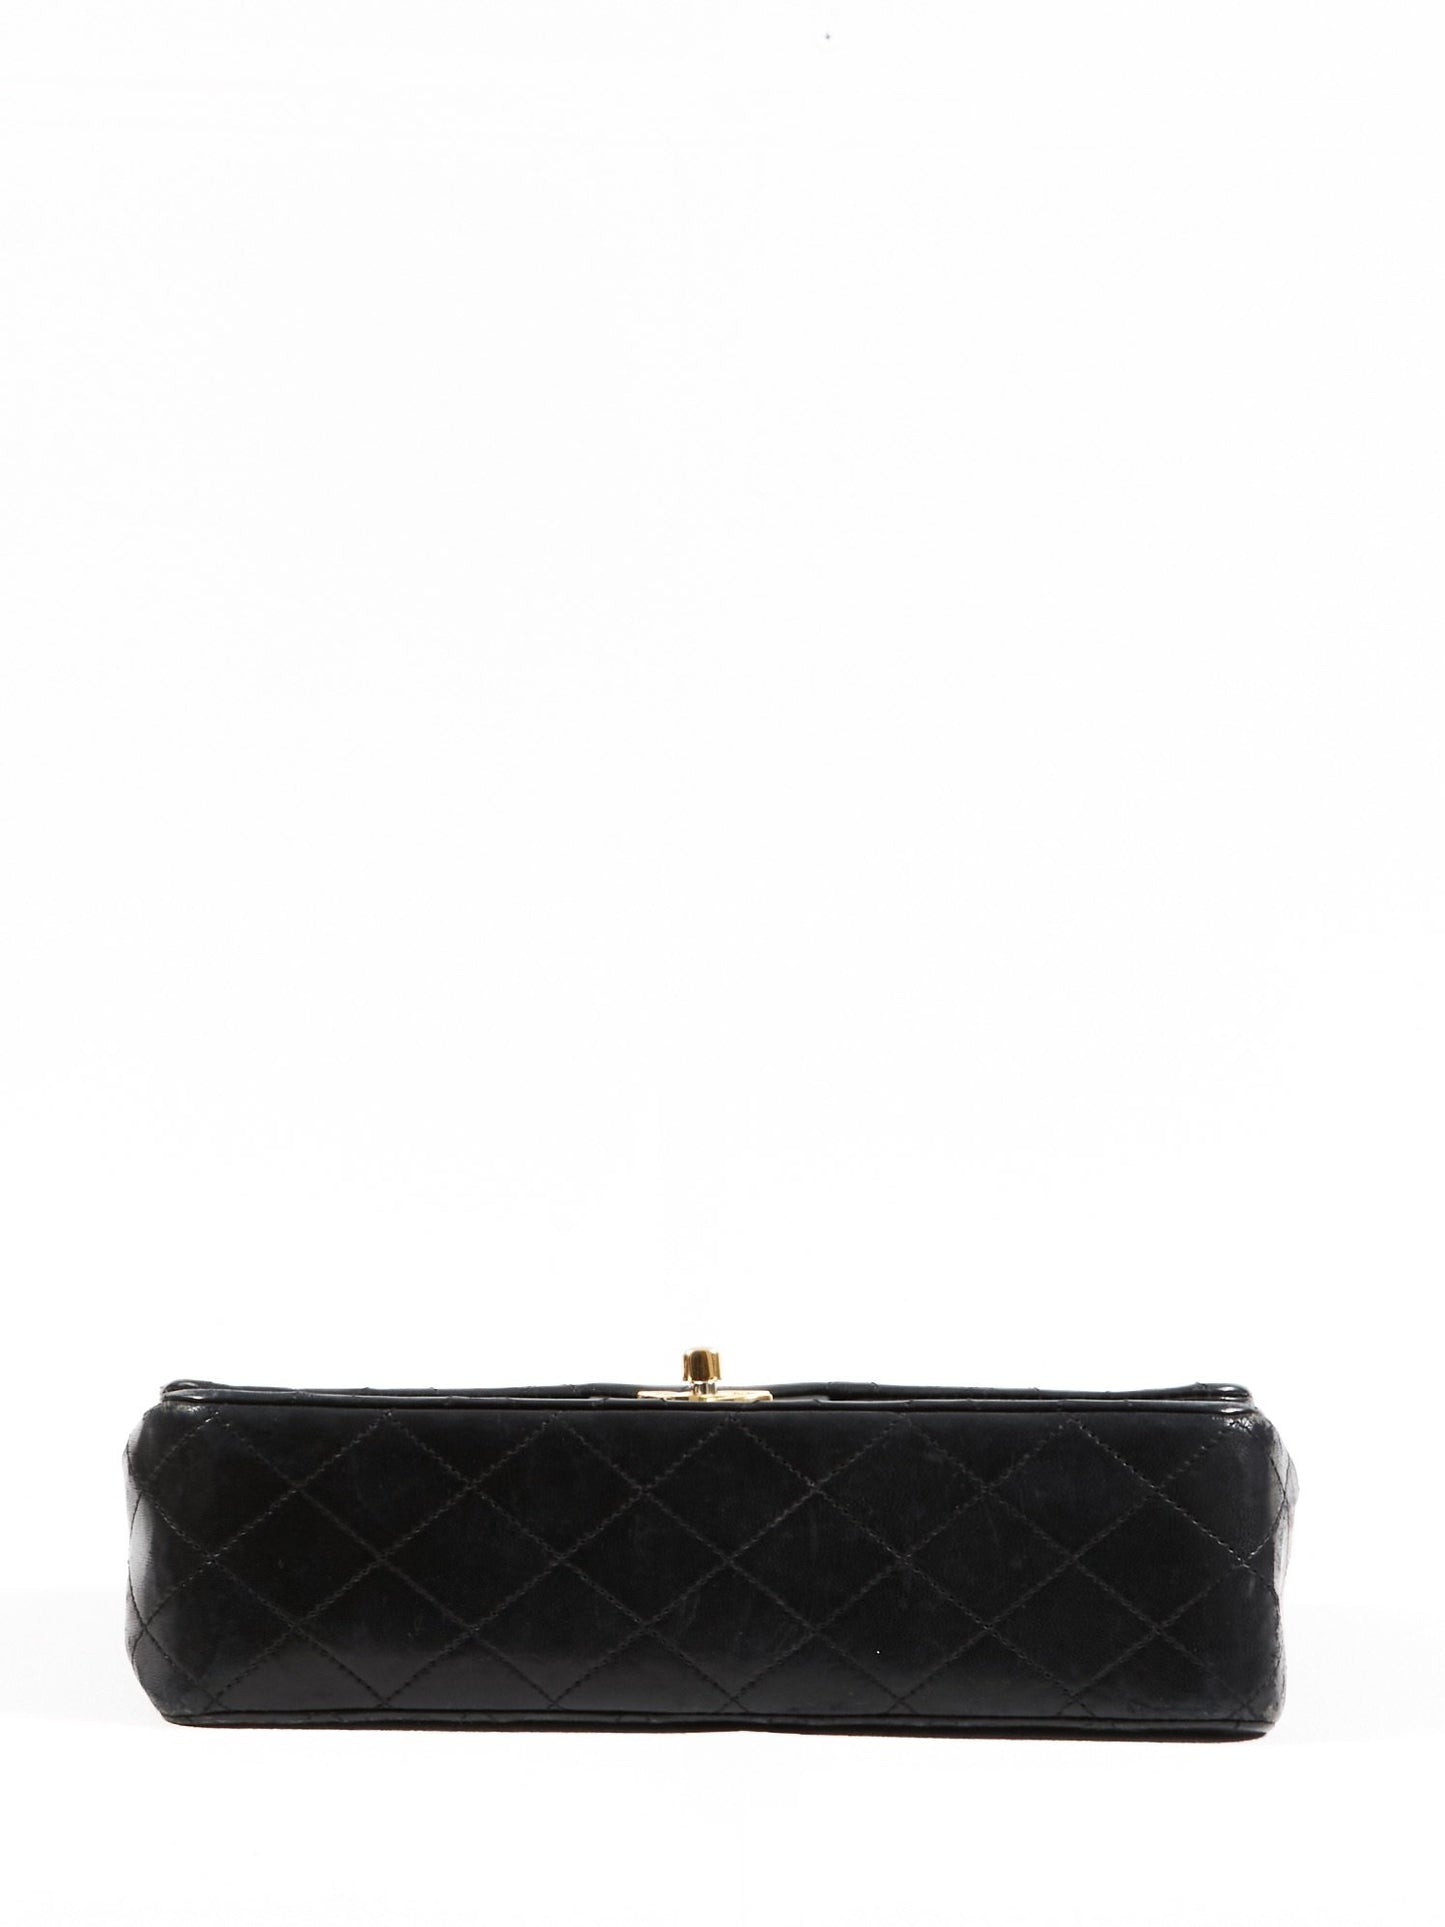 Chanel Vintage Black Lambskin Medium Classic Double Flap Bag GHW